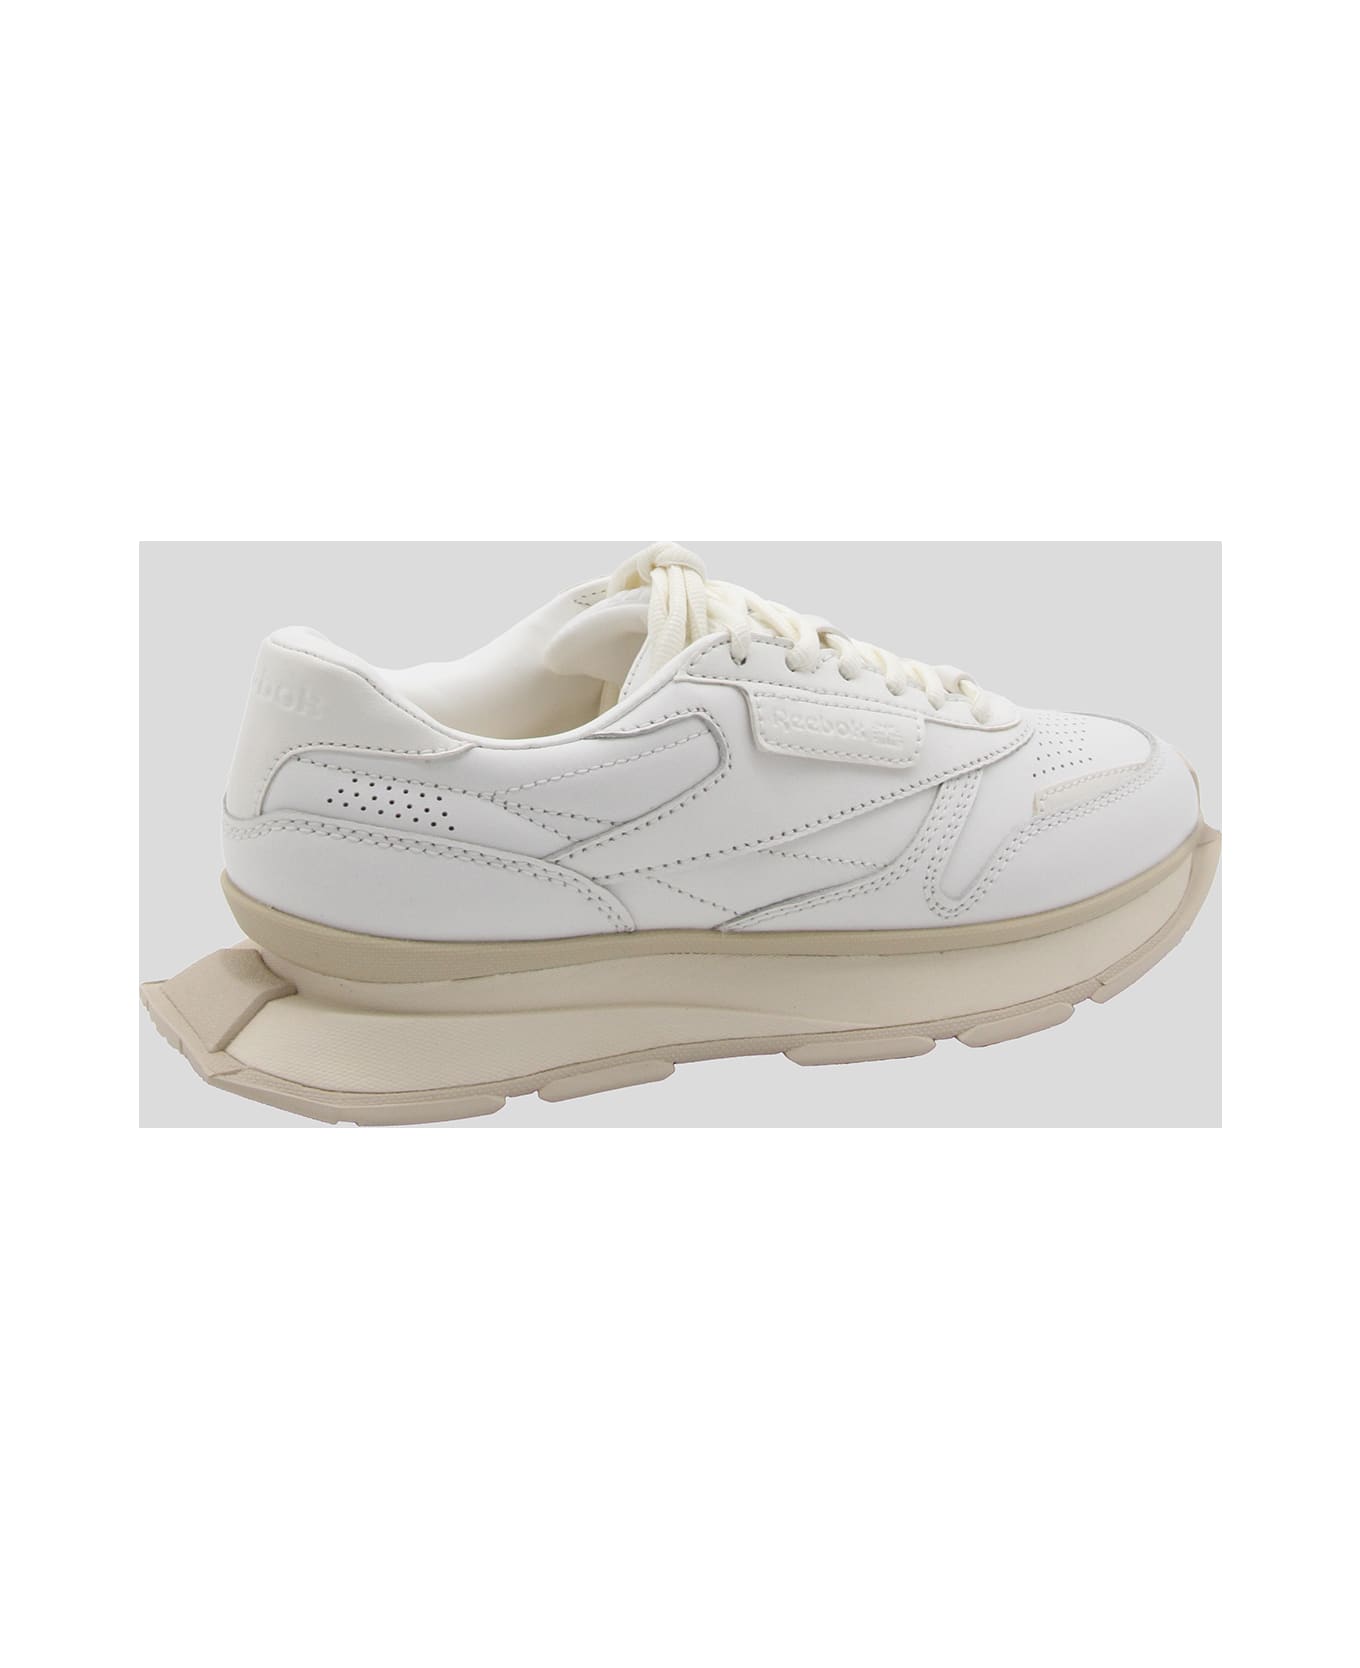 Reebok White Leather Ltd - White スニーカー